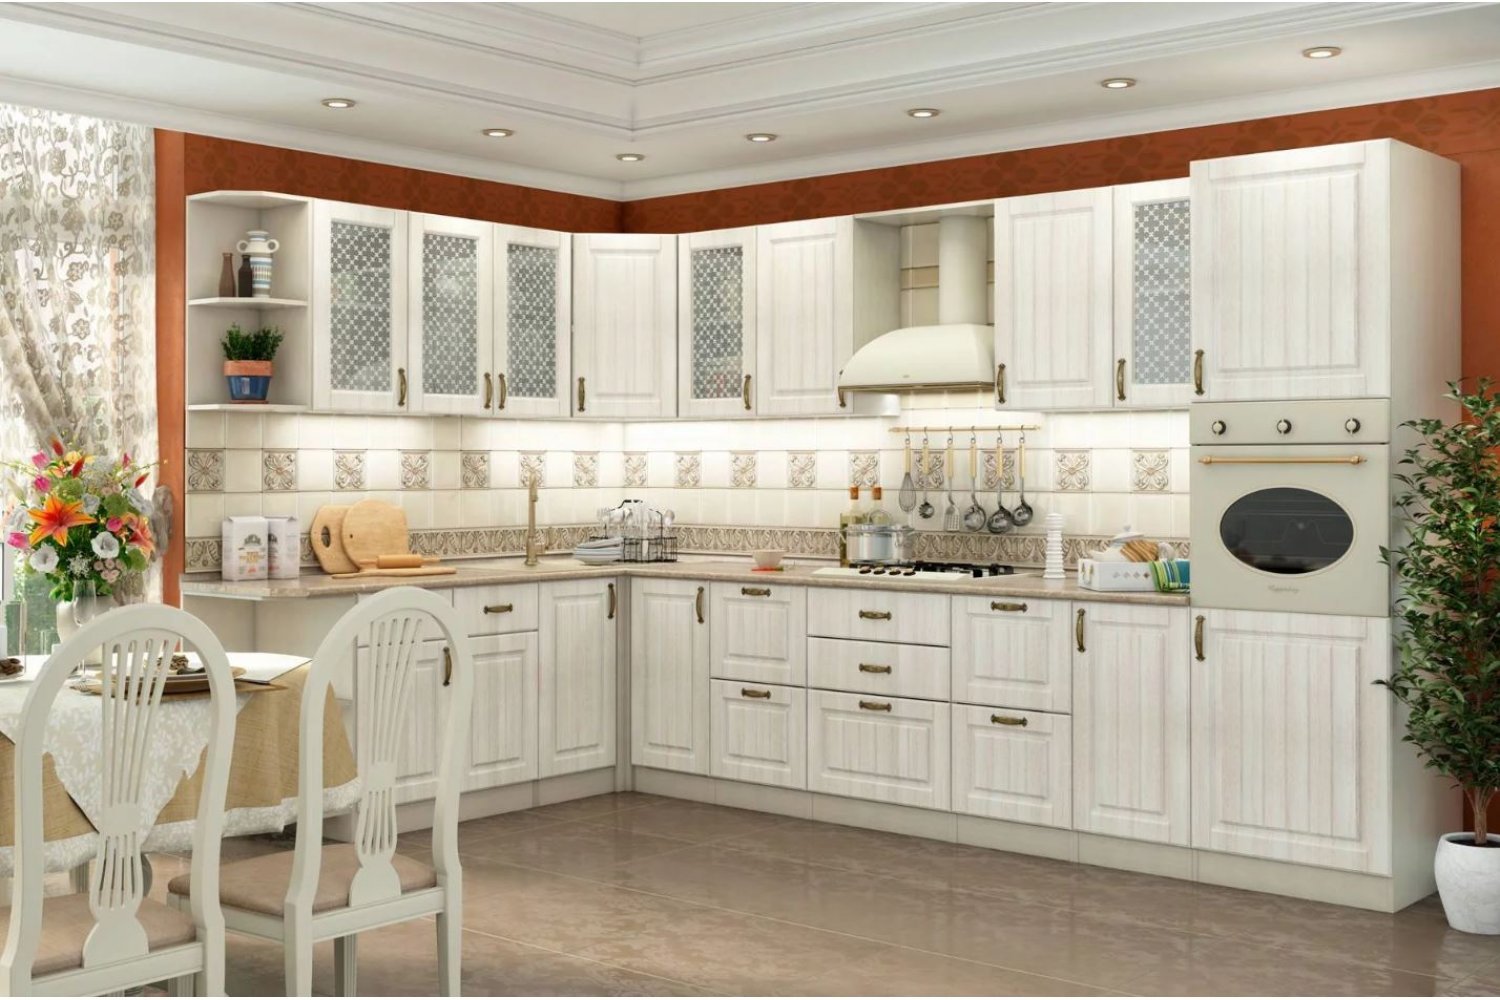 Кухонный гарнитур зеленый с белым фото дизайн